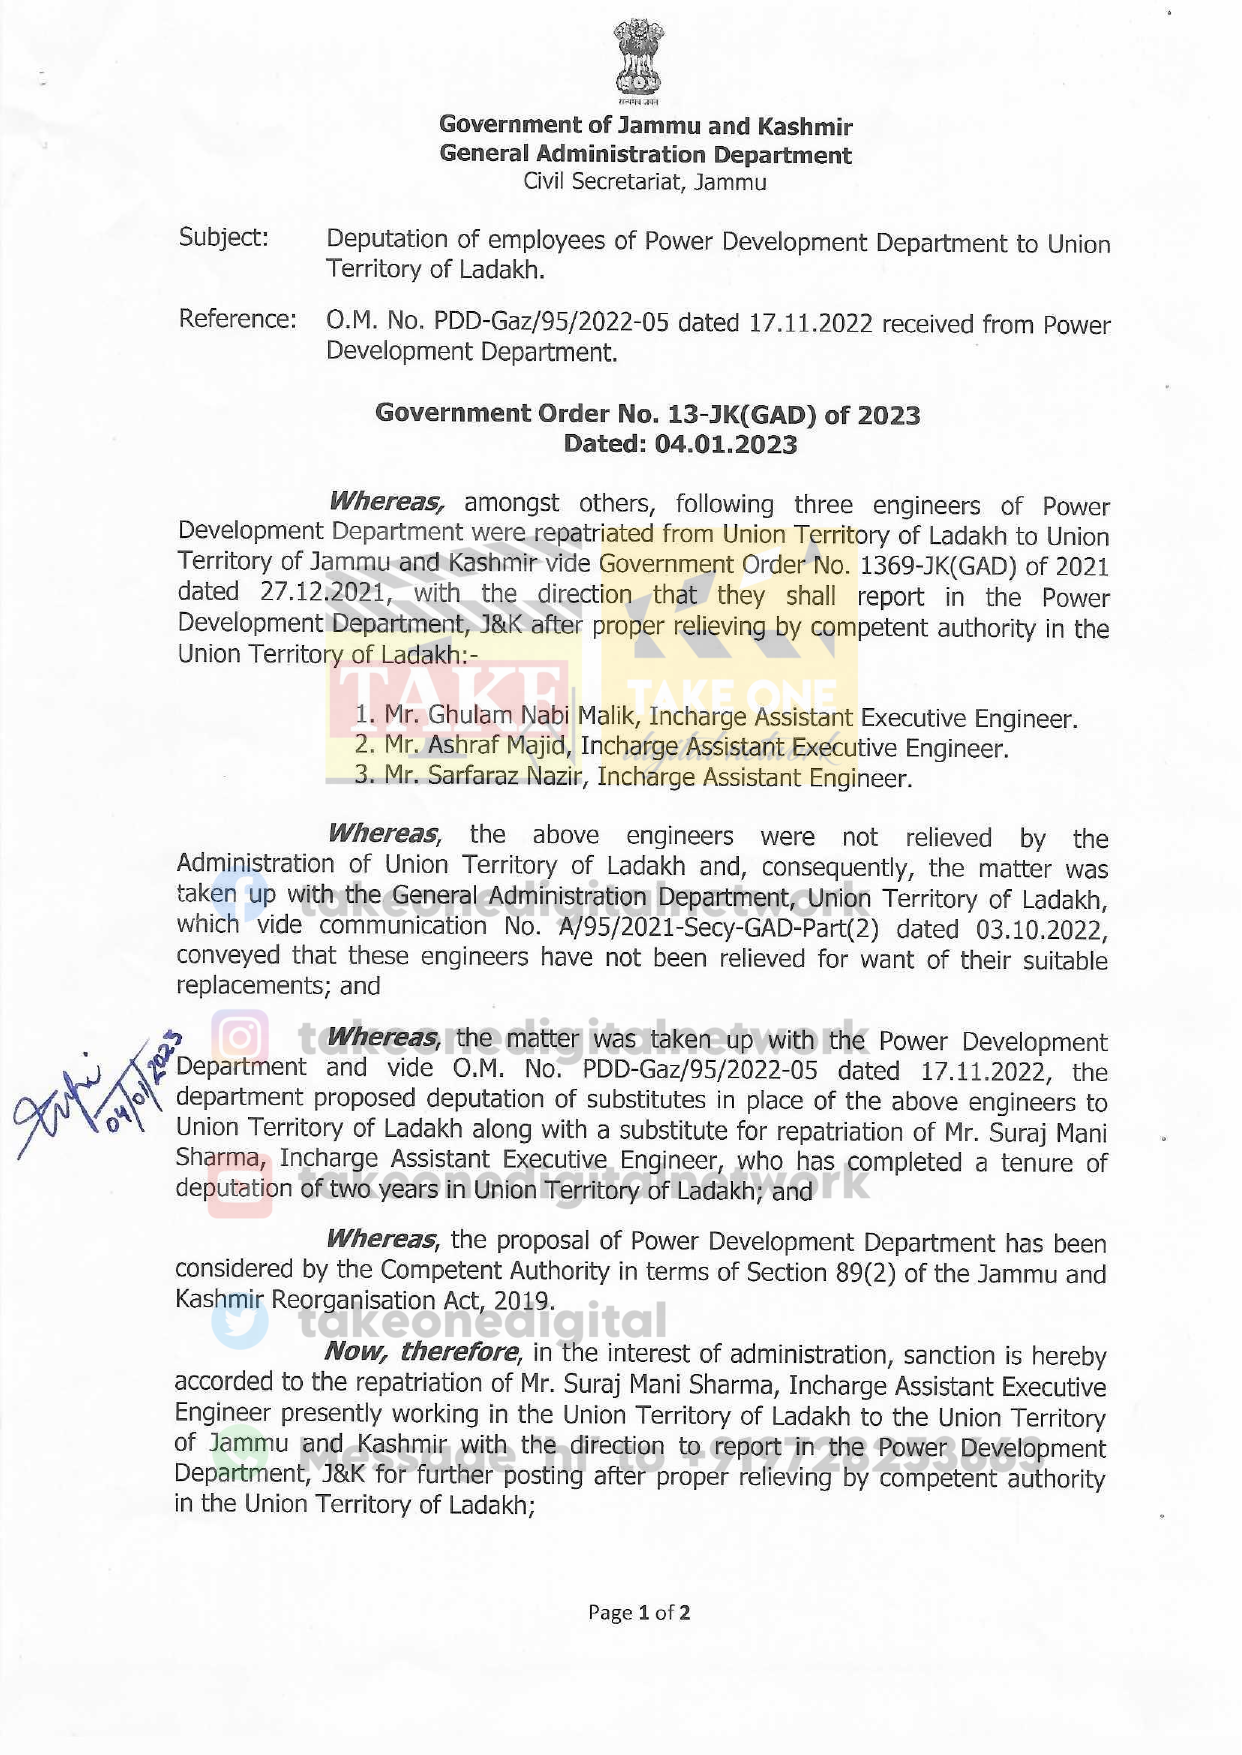 Deputation of employees of PDD to UT Ladakh